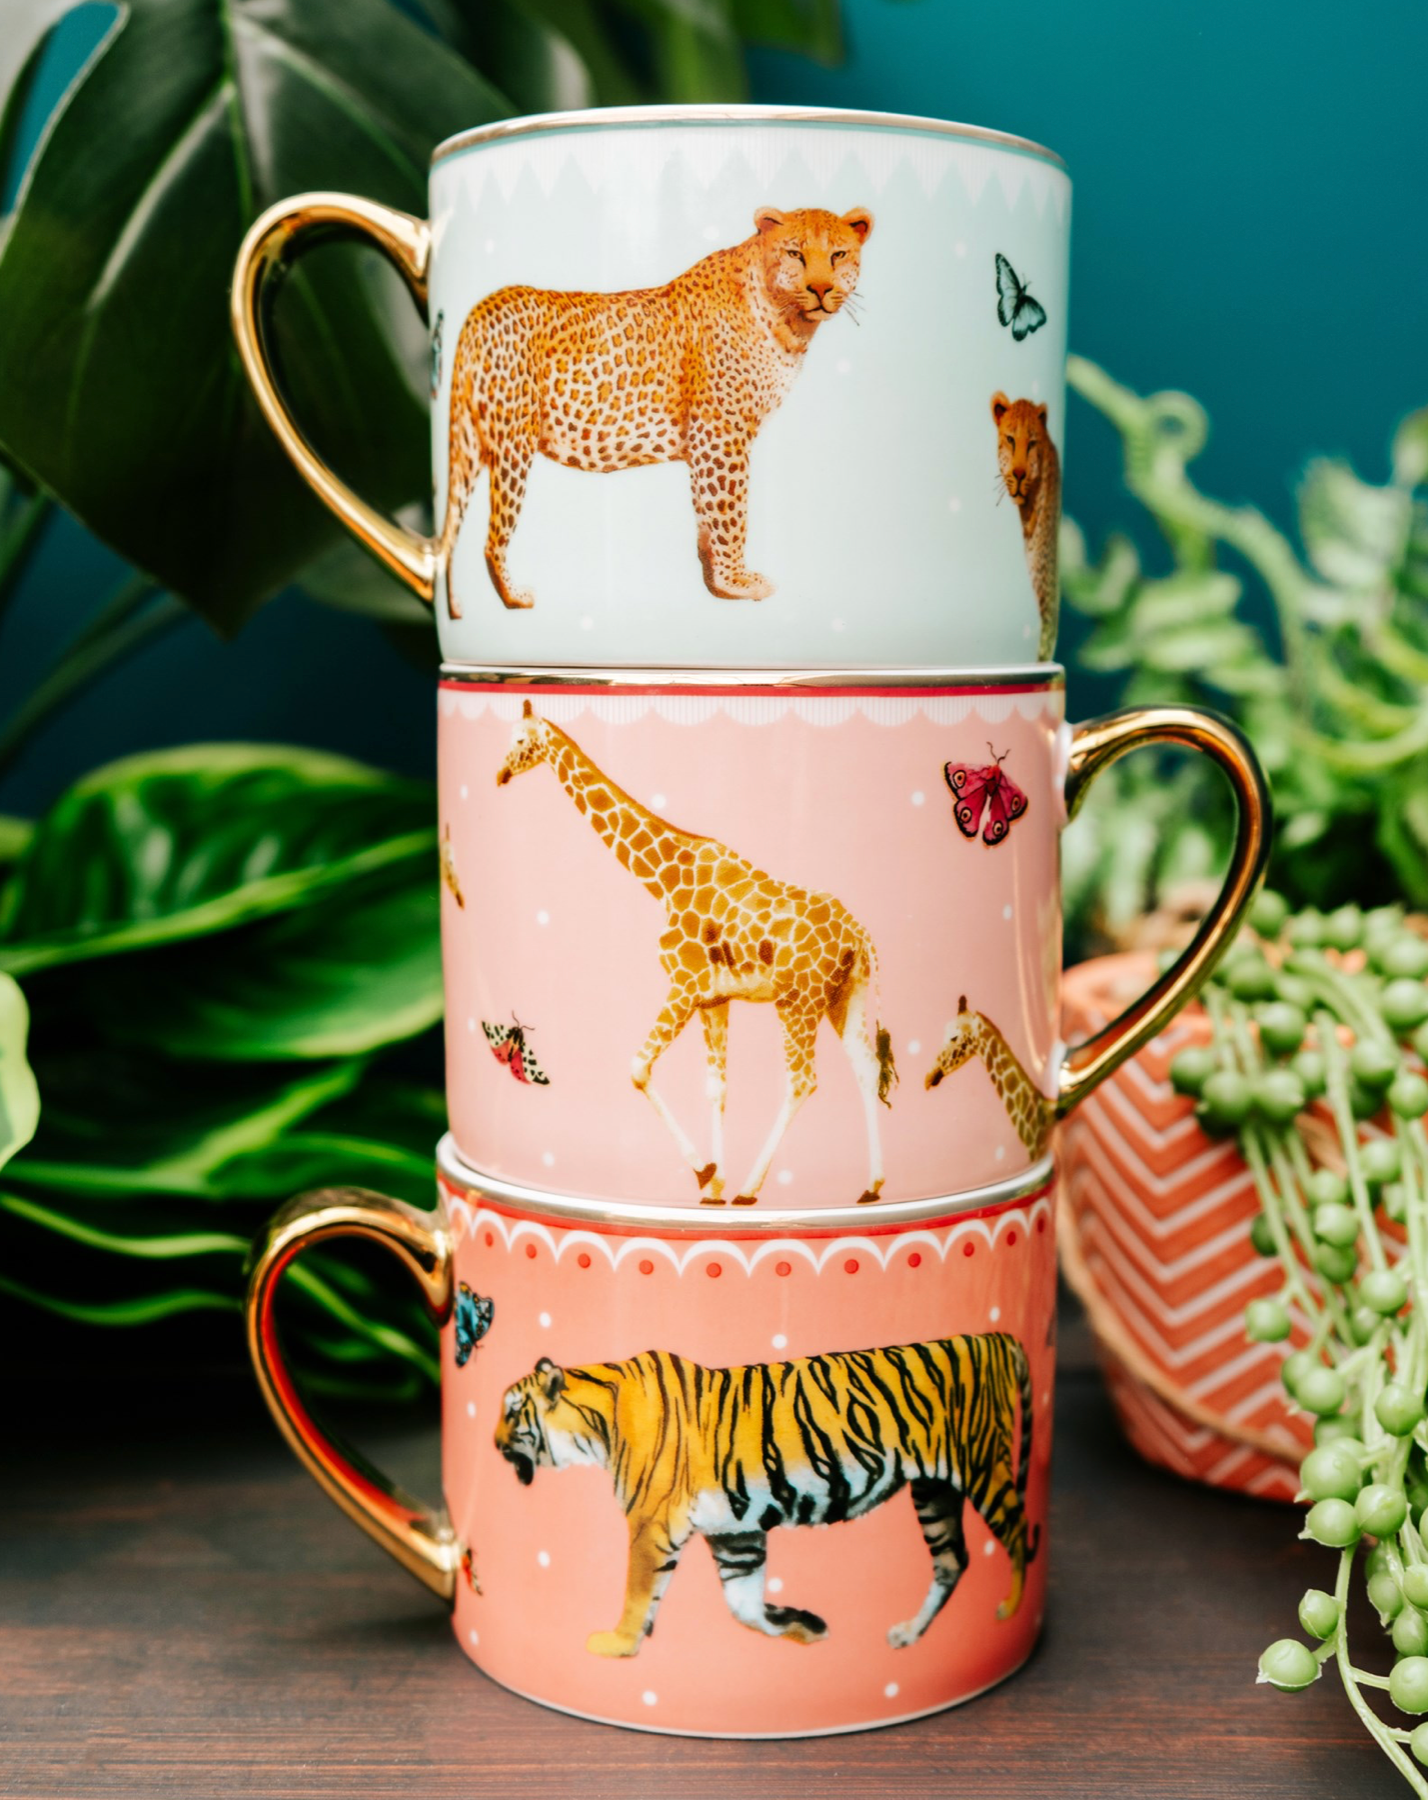 Wild Garden Straight Sided Porcelain Mug, Leopard